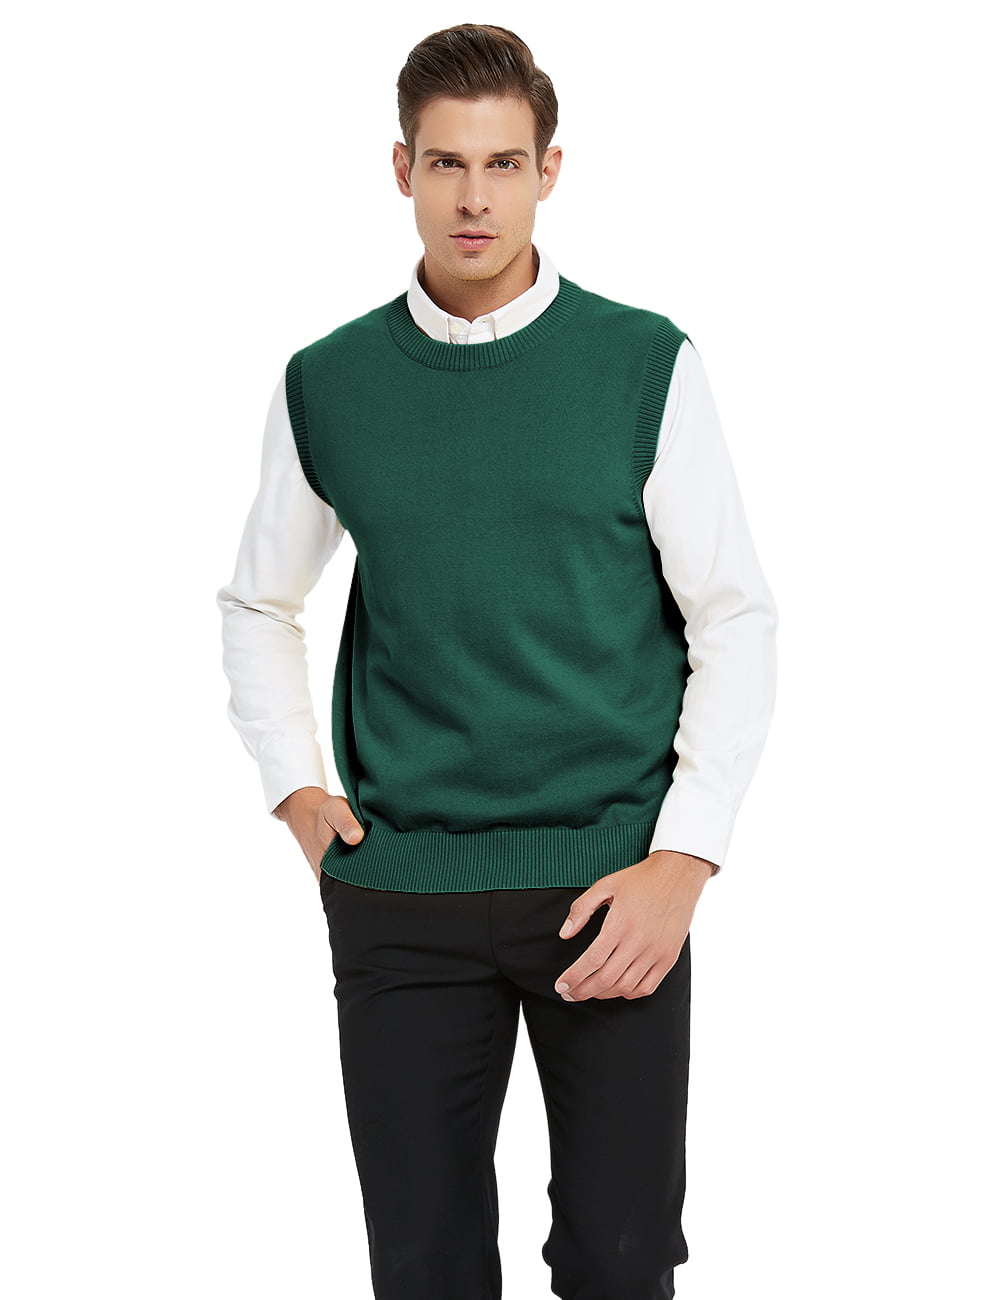 Toptie - TOPTIE Men's 100% Cotton Knit Sweater Vest, Crew Neck Solid ...